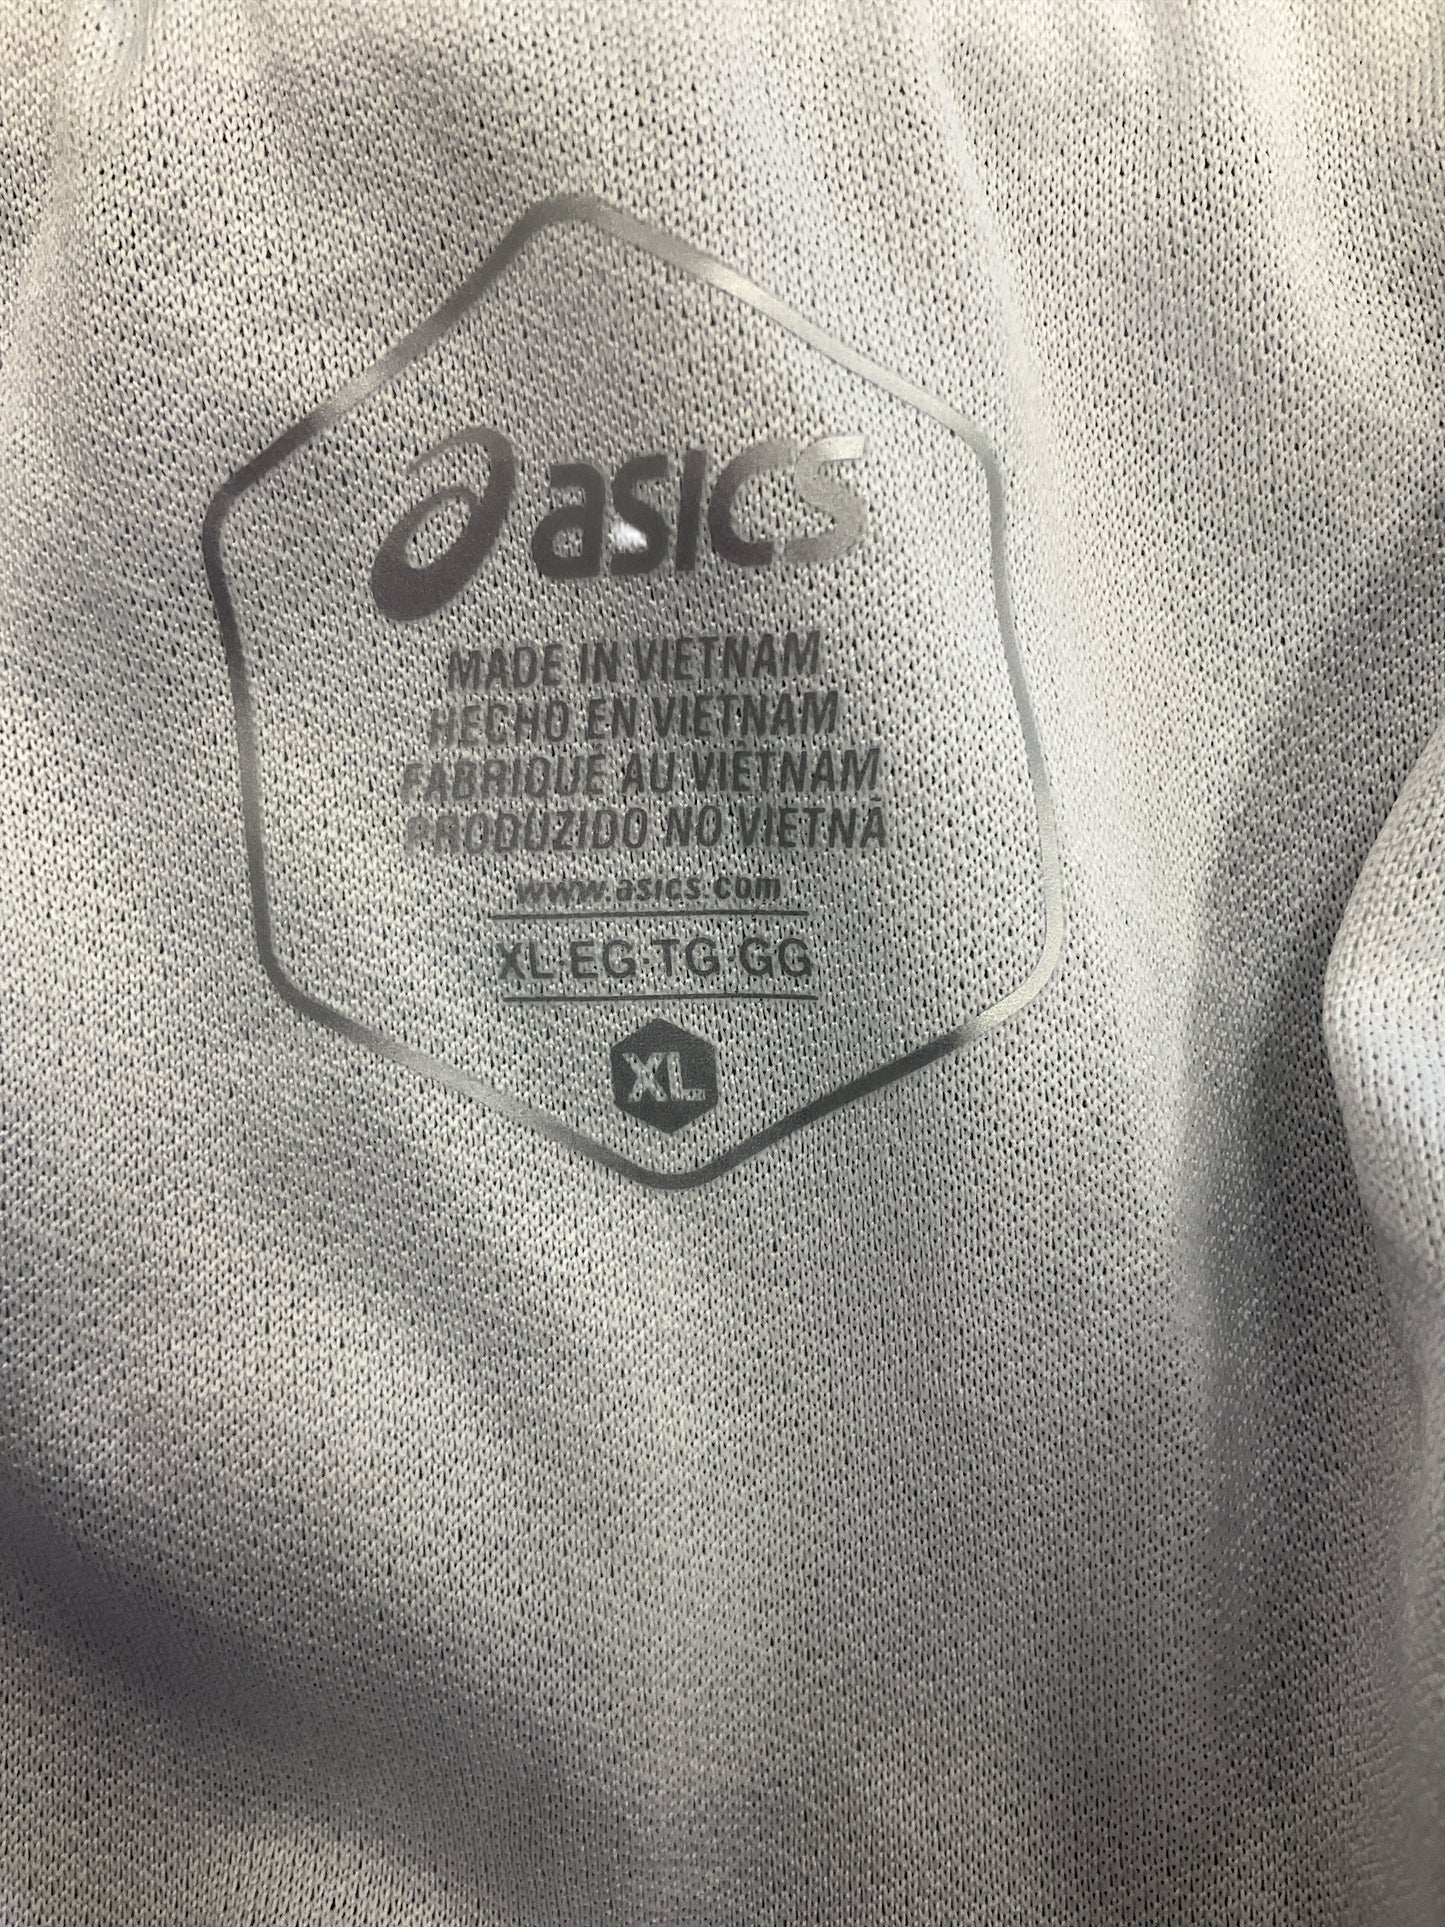 Athletic Shorts By Asics  Size: Xl